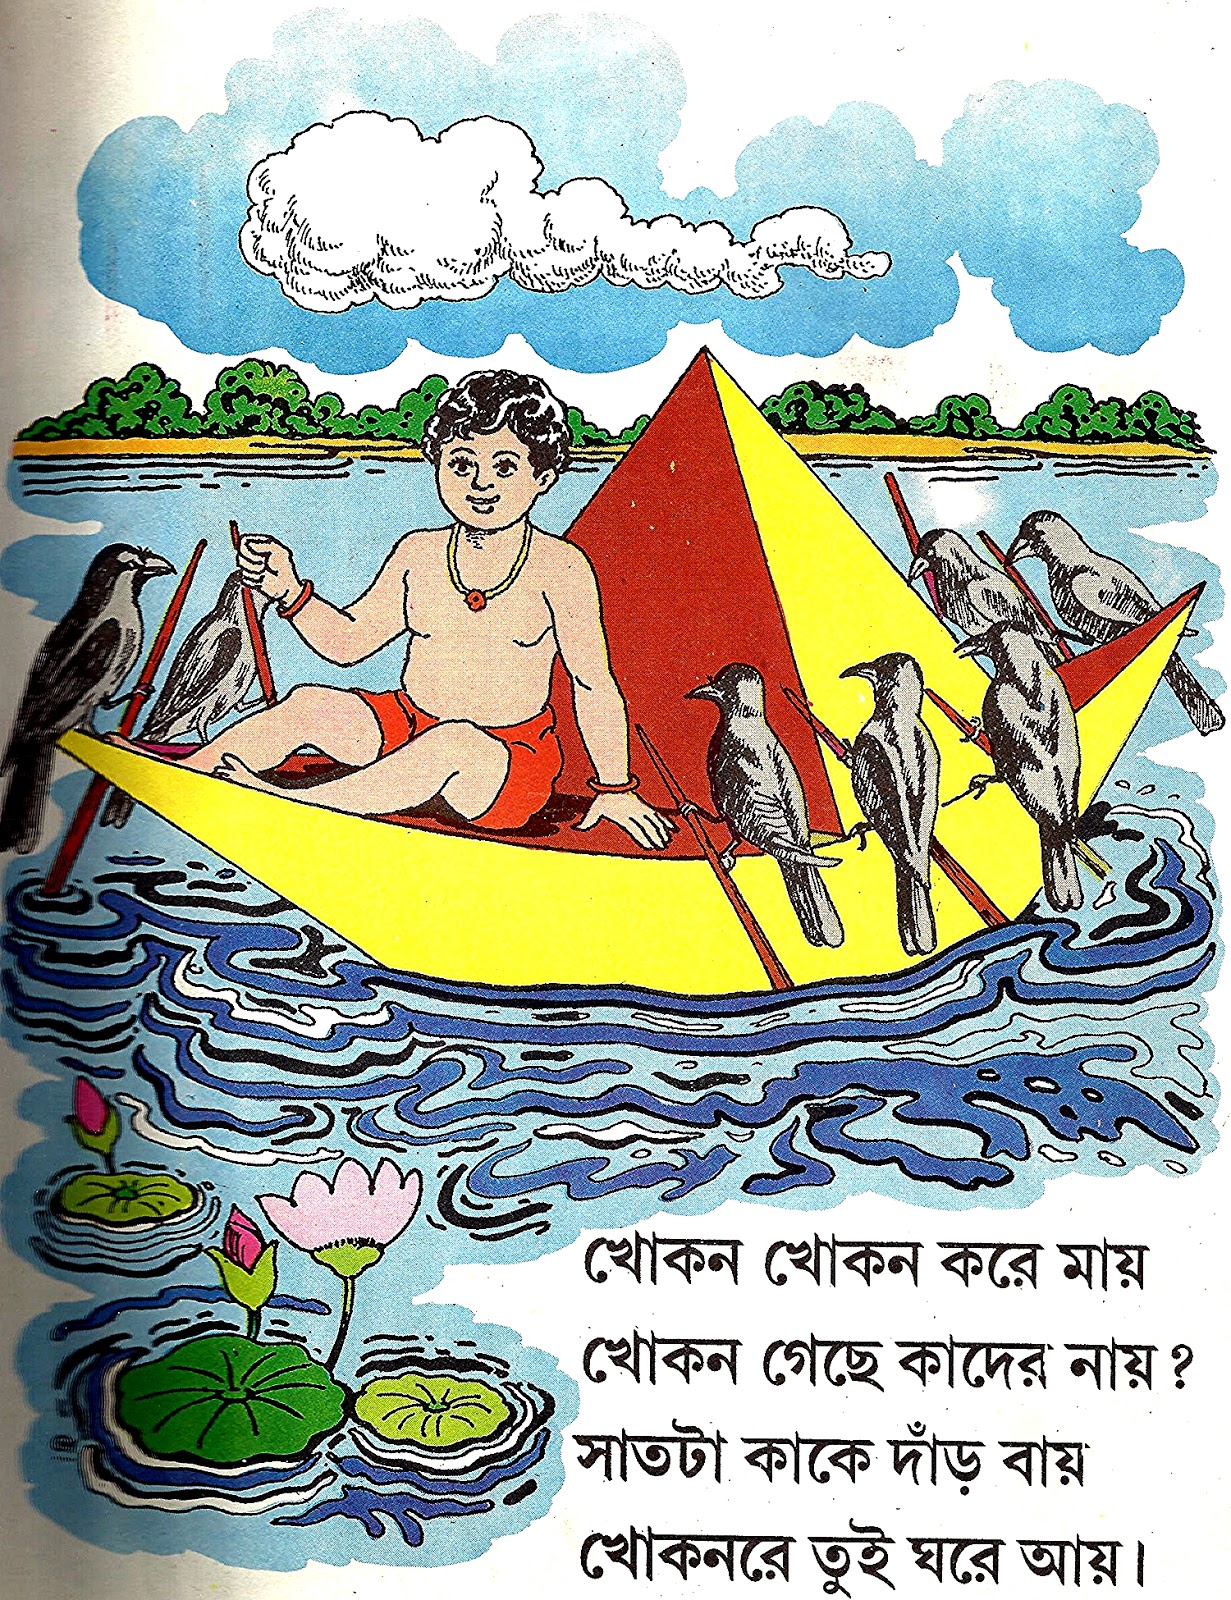 bengali essay on childhood memories